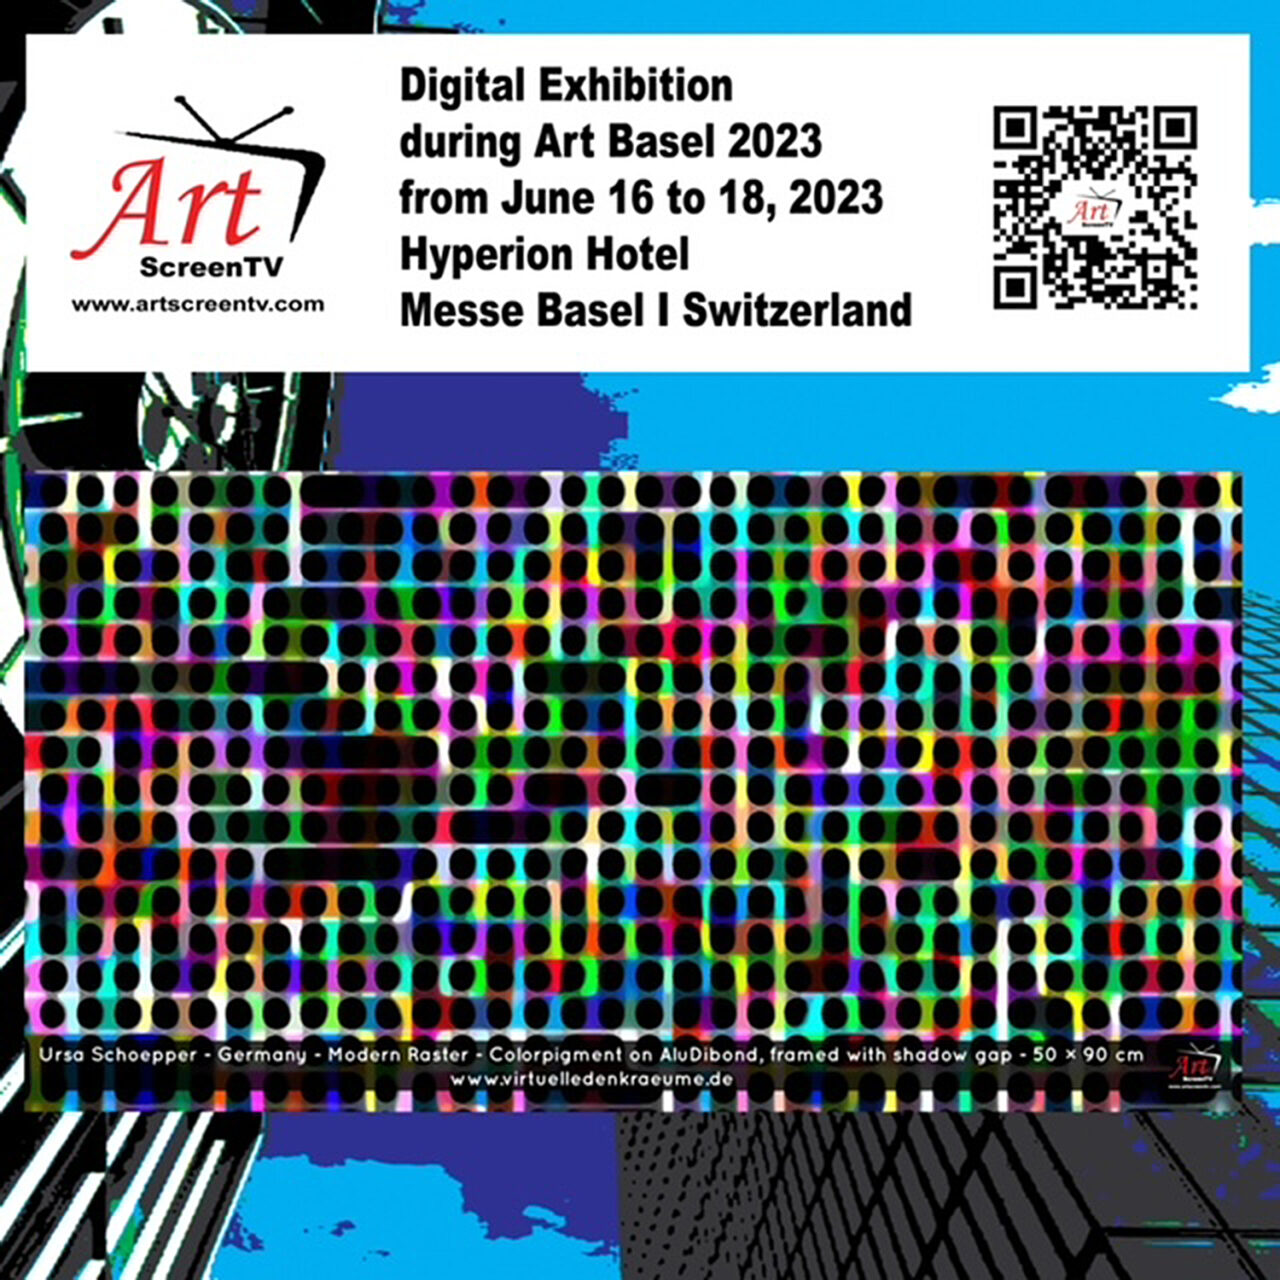 Digitale Exhibition during Art Basel 2023  Hyperion Hotel, Basel